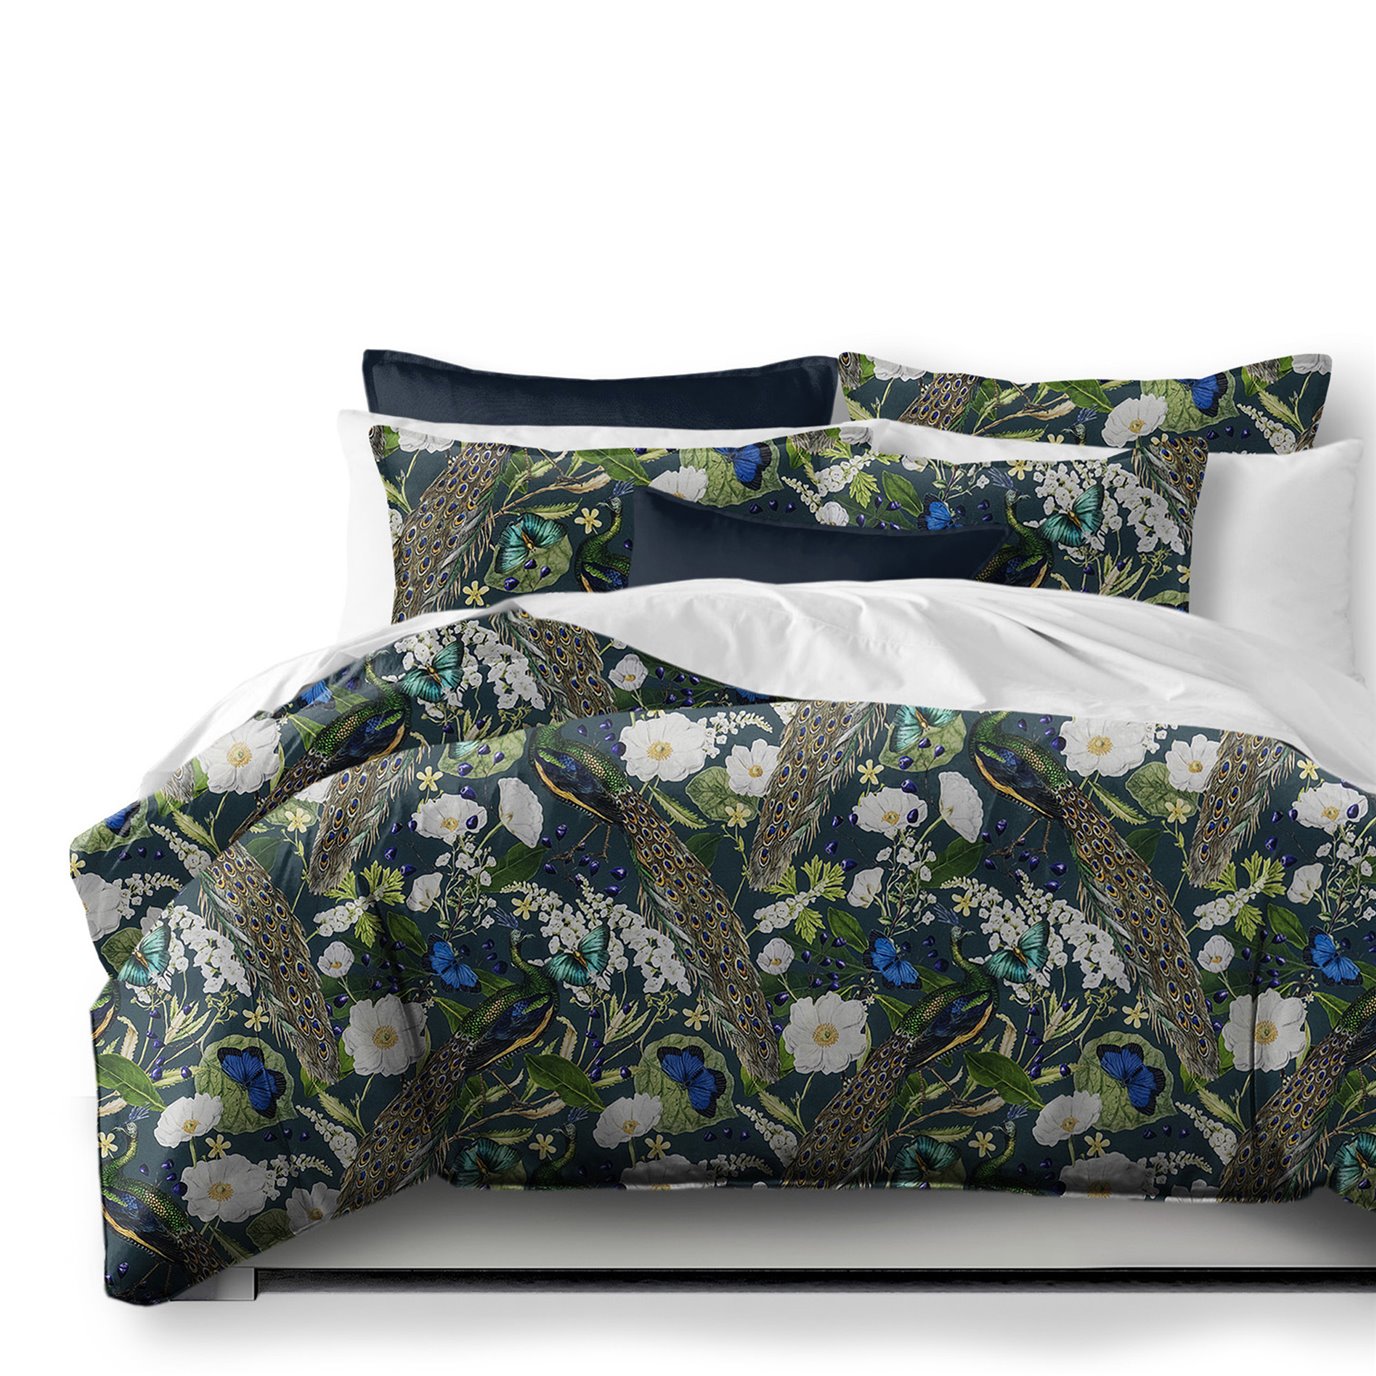 Peacock Print Teal/Navy Duvet Cover and Pillow Sham(s) Set - Size Full